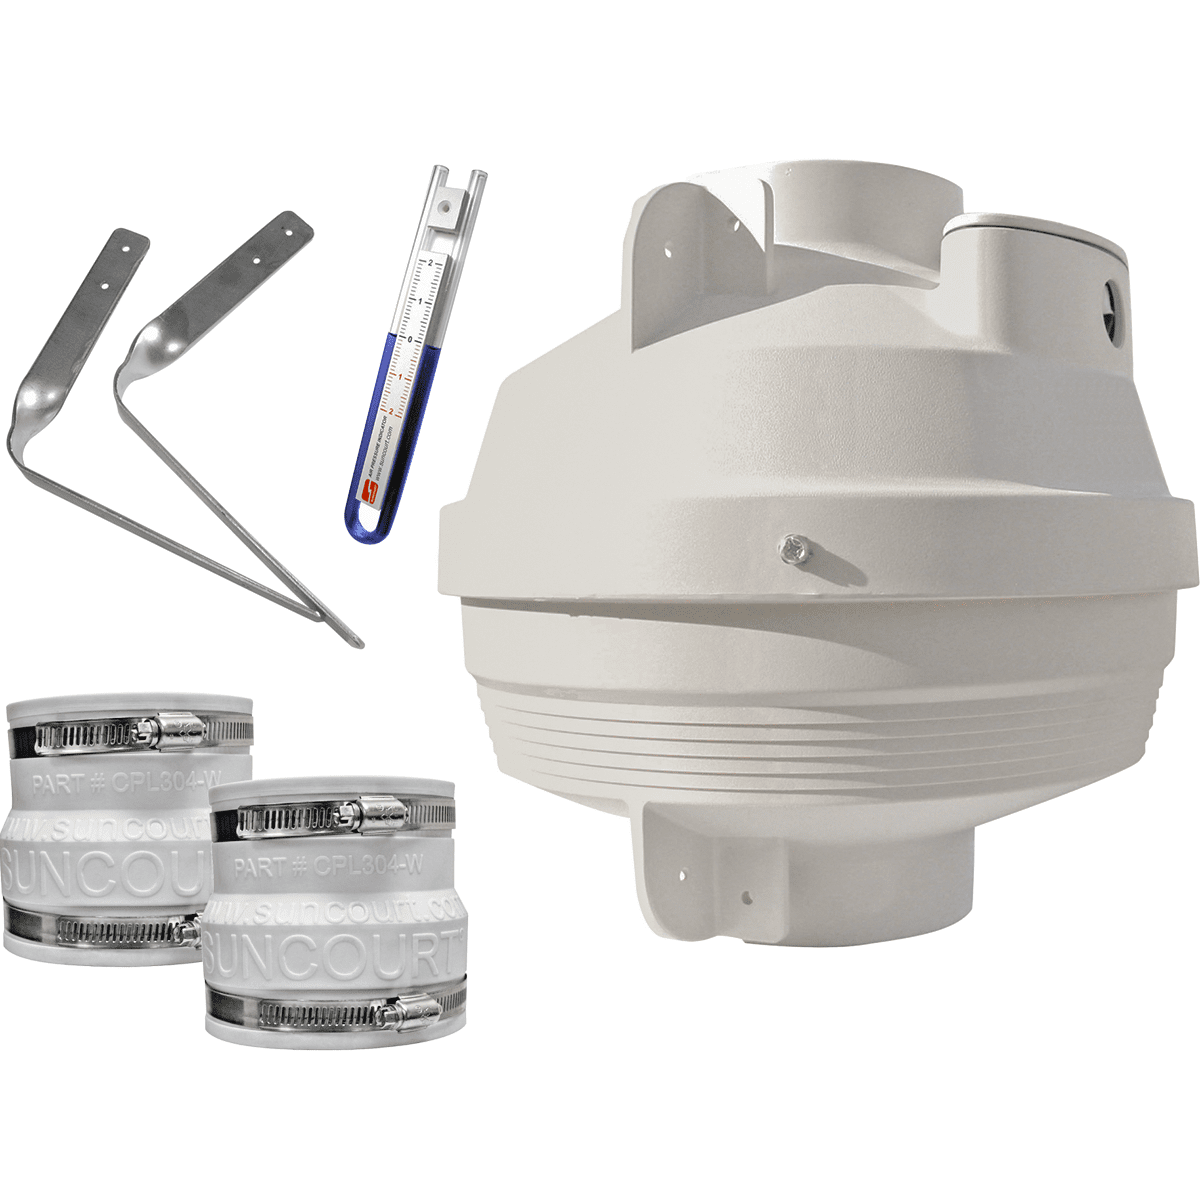 Suncourt Radon Fan Mitigation Kit - 4"" to 3"" Diameter Couplers